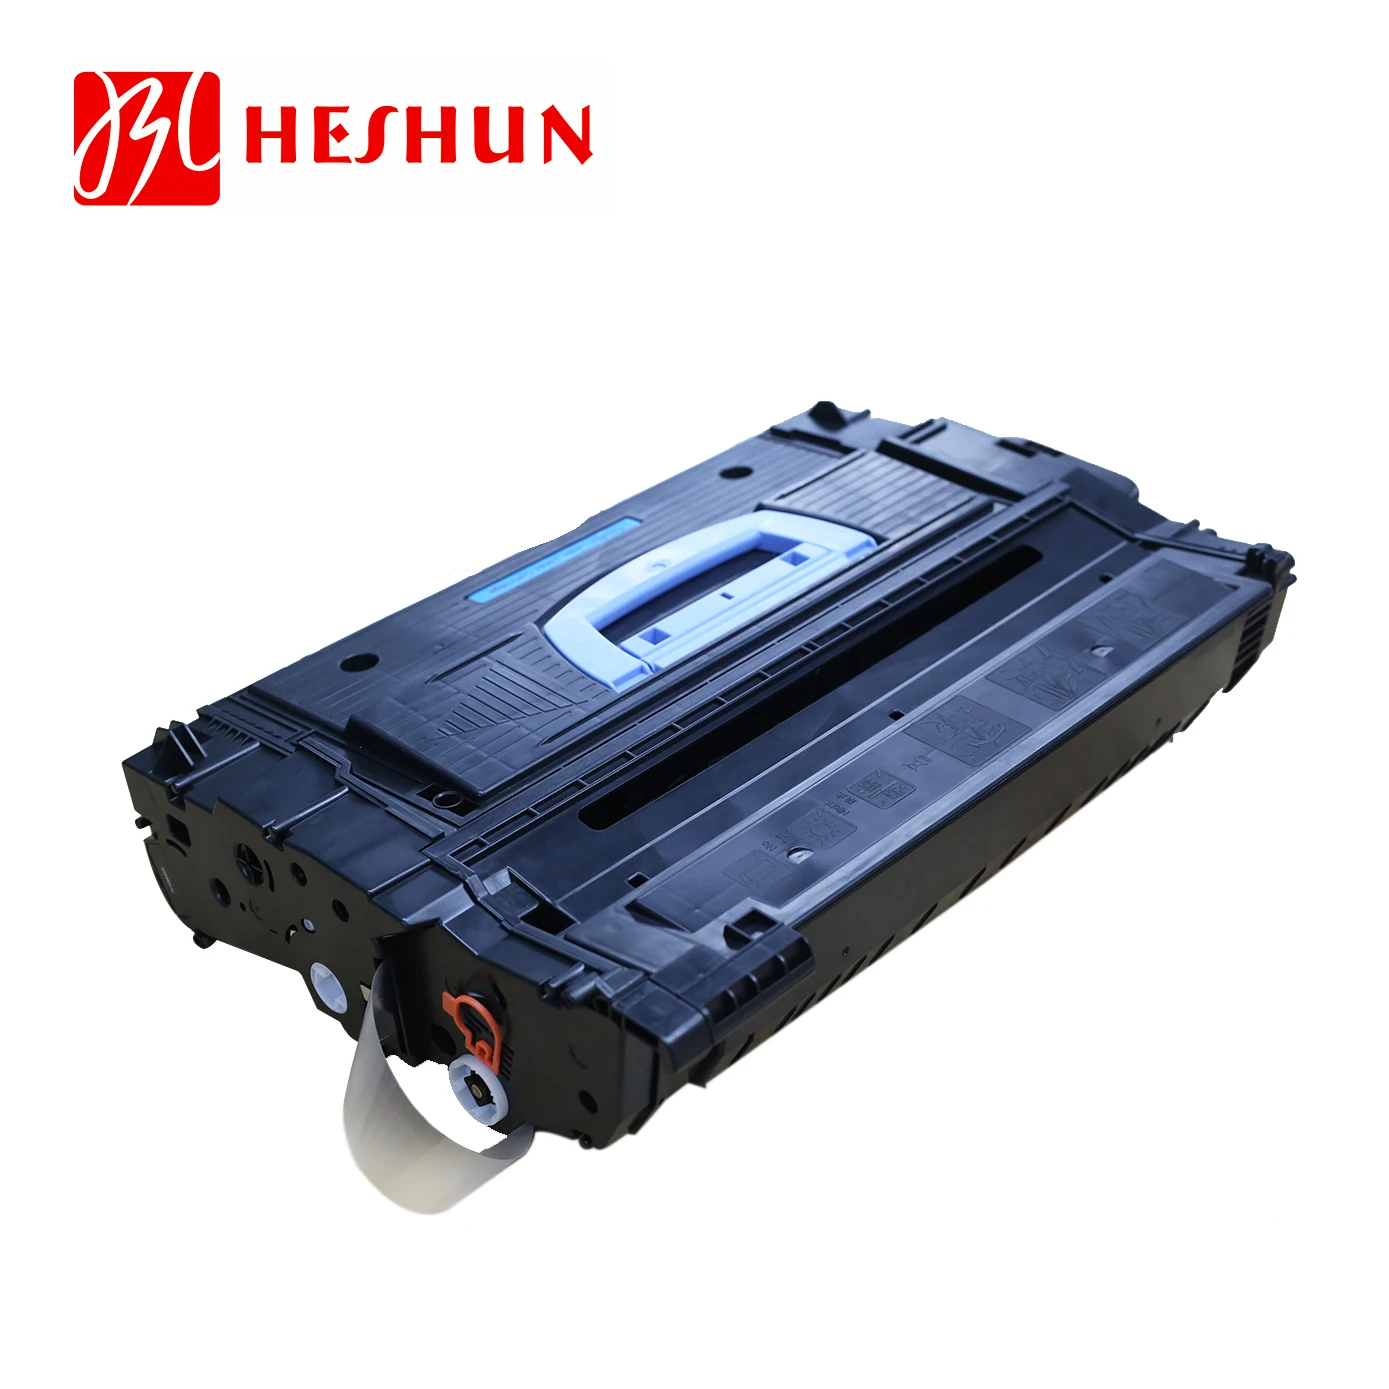 HESHUNC8543X 43X Toner Cartridge 8543X for H-P Laserjet 9000MFP 9000dn 9000hnf 9000hns 9000n 9040MFP 9040dn 9040n 905